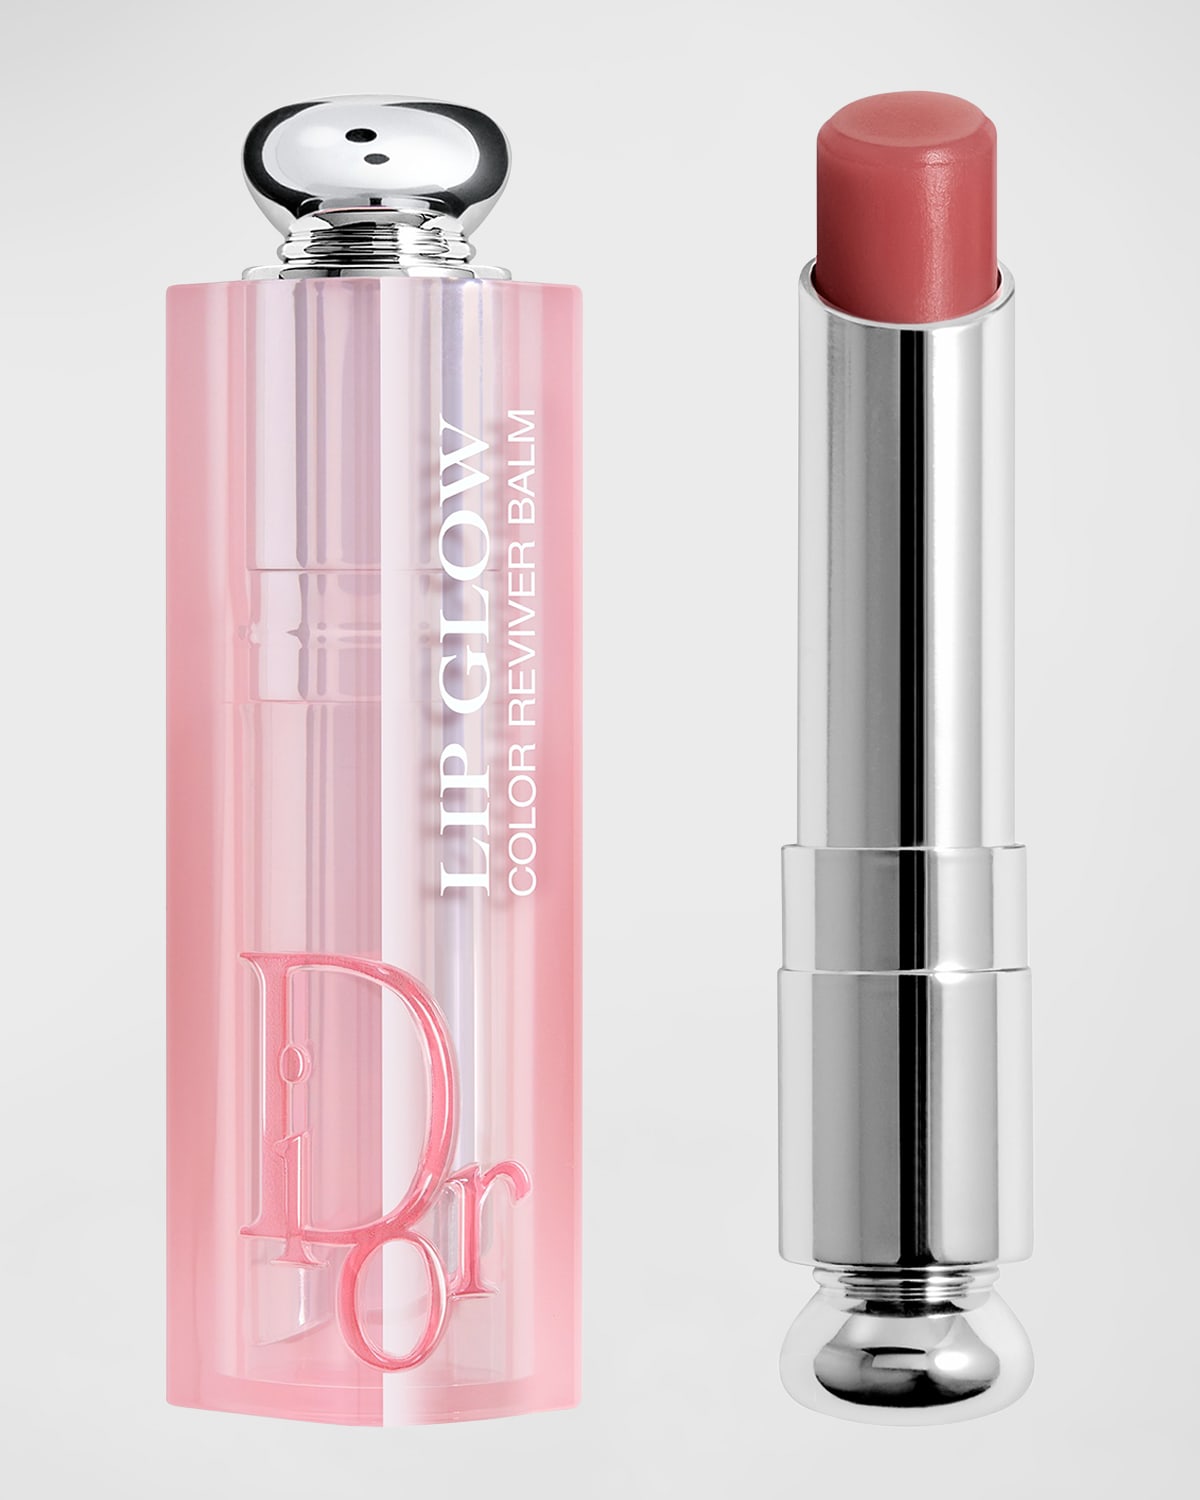 Shop Dior Addict Lip Glow Balm In 012 Rosewood